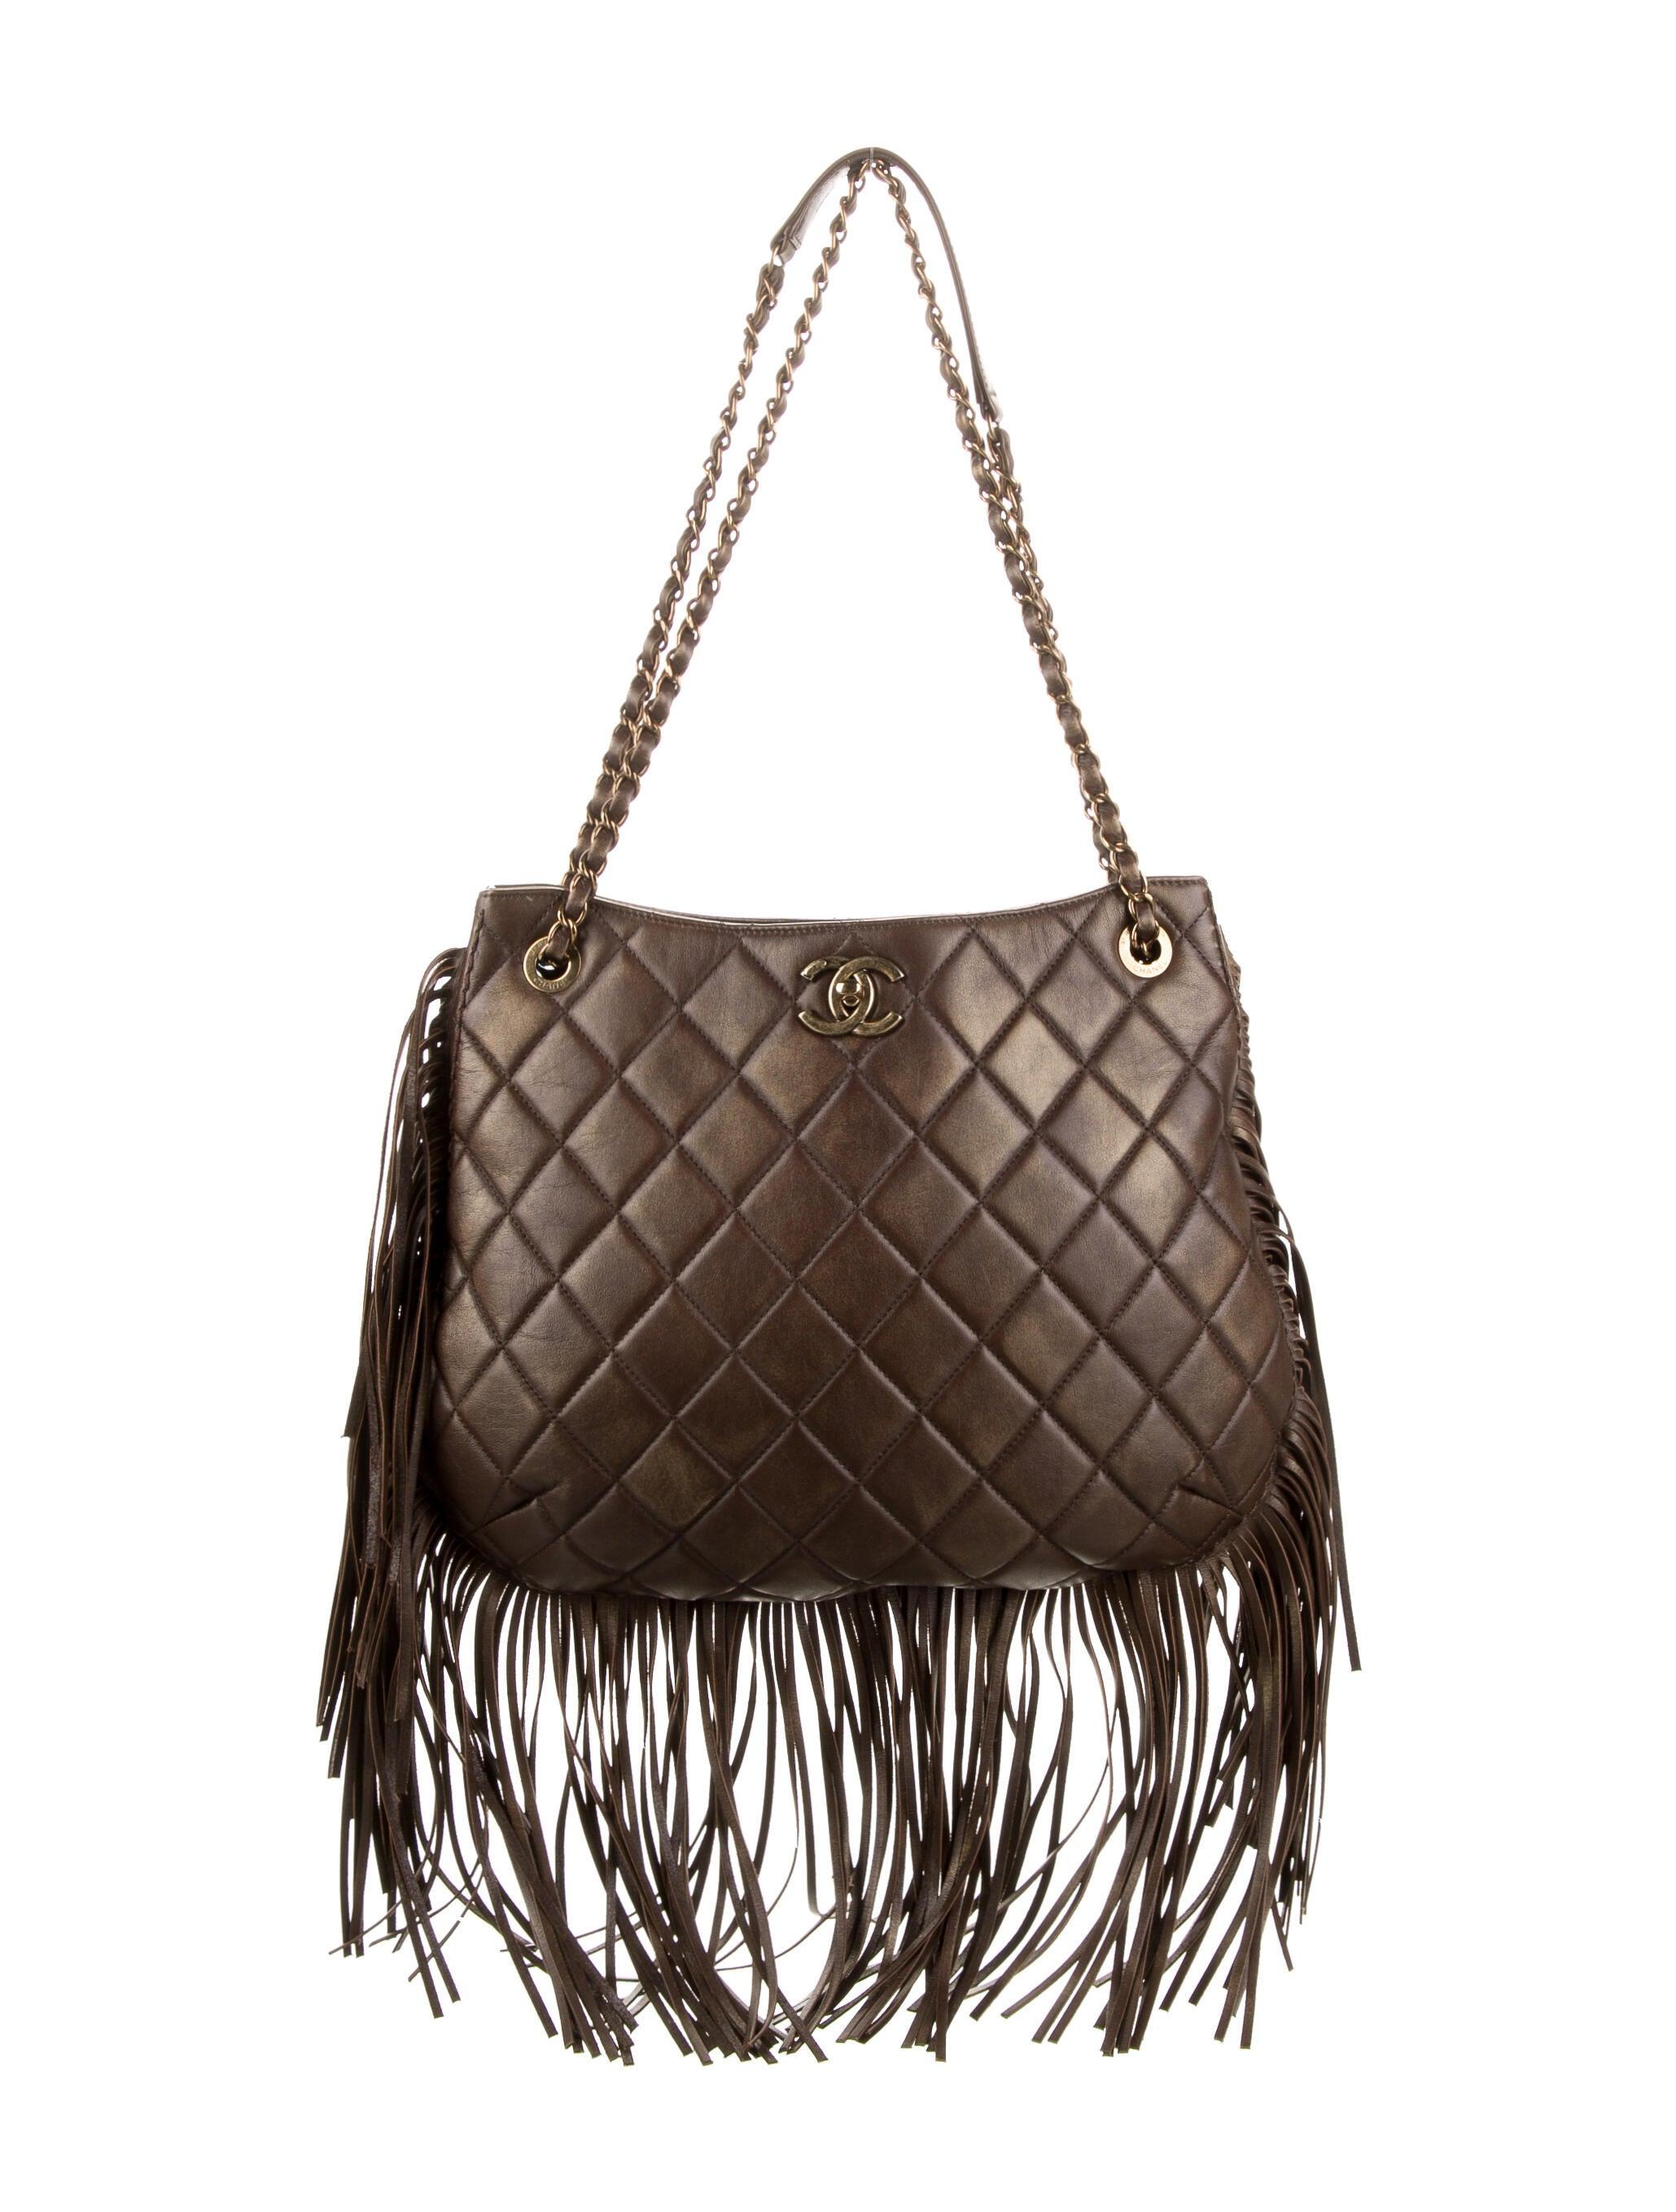 Chanel 2014 Paris Dallas Metièrs D'Art Runway Brown Fringe Shopper Tote Bag For Sale 4